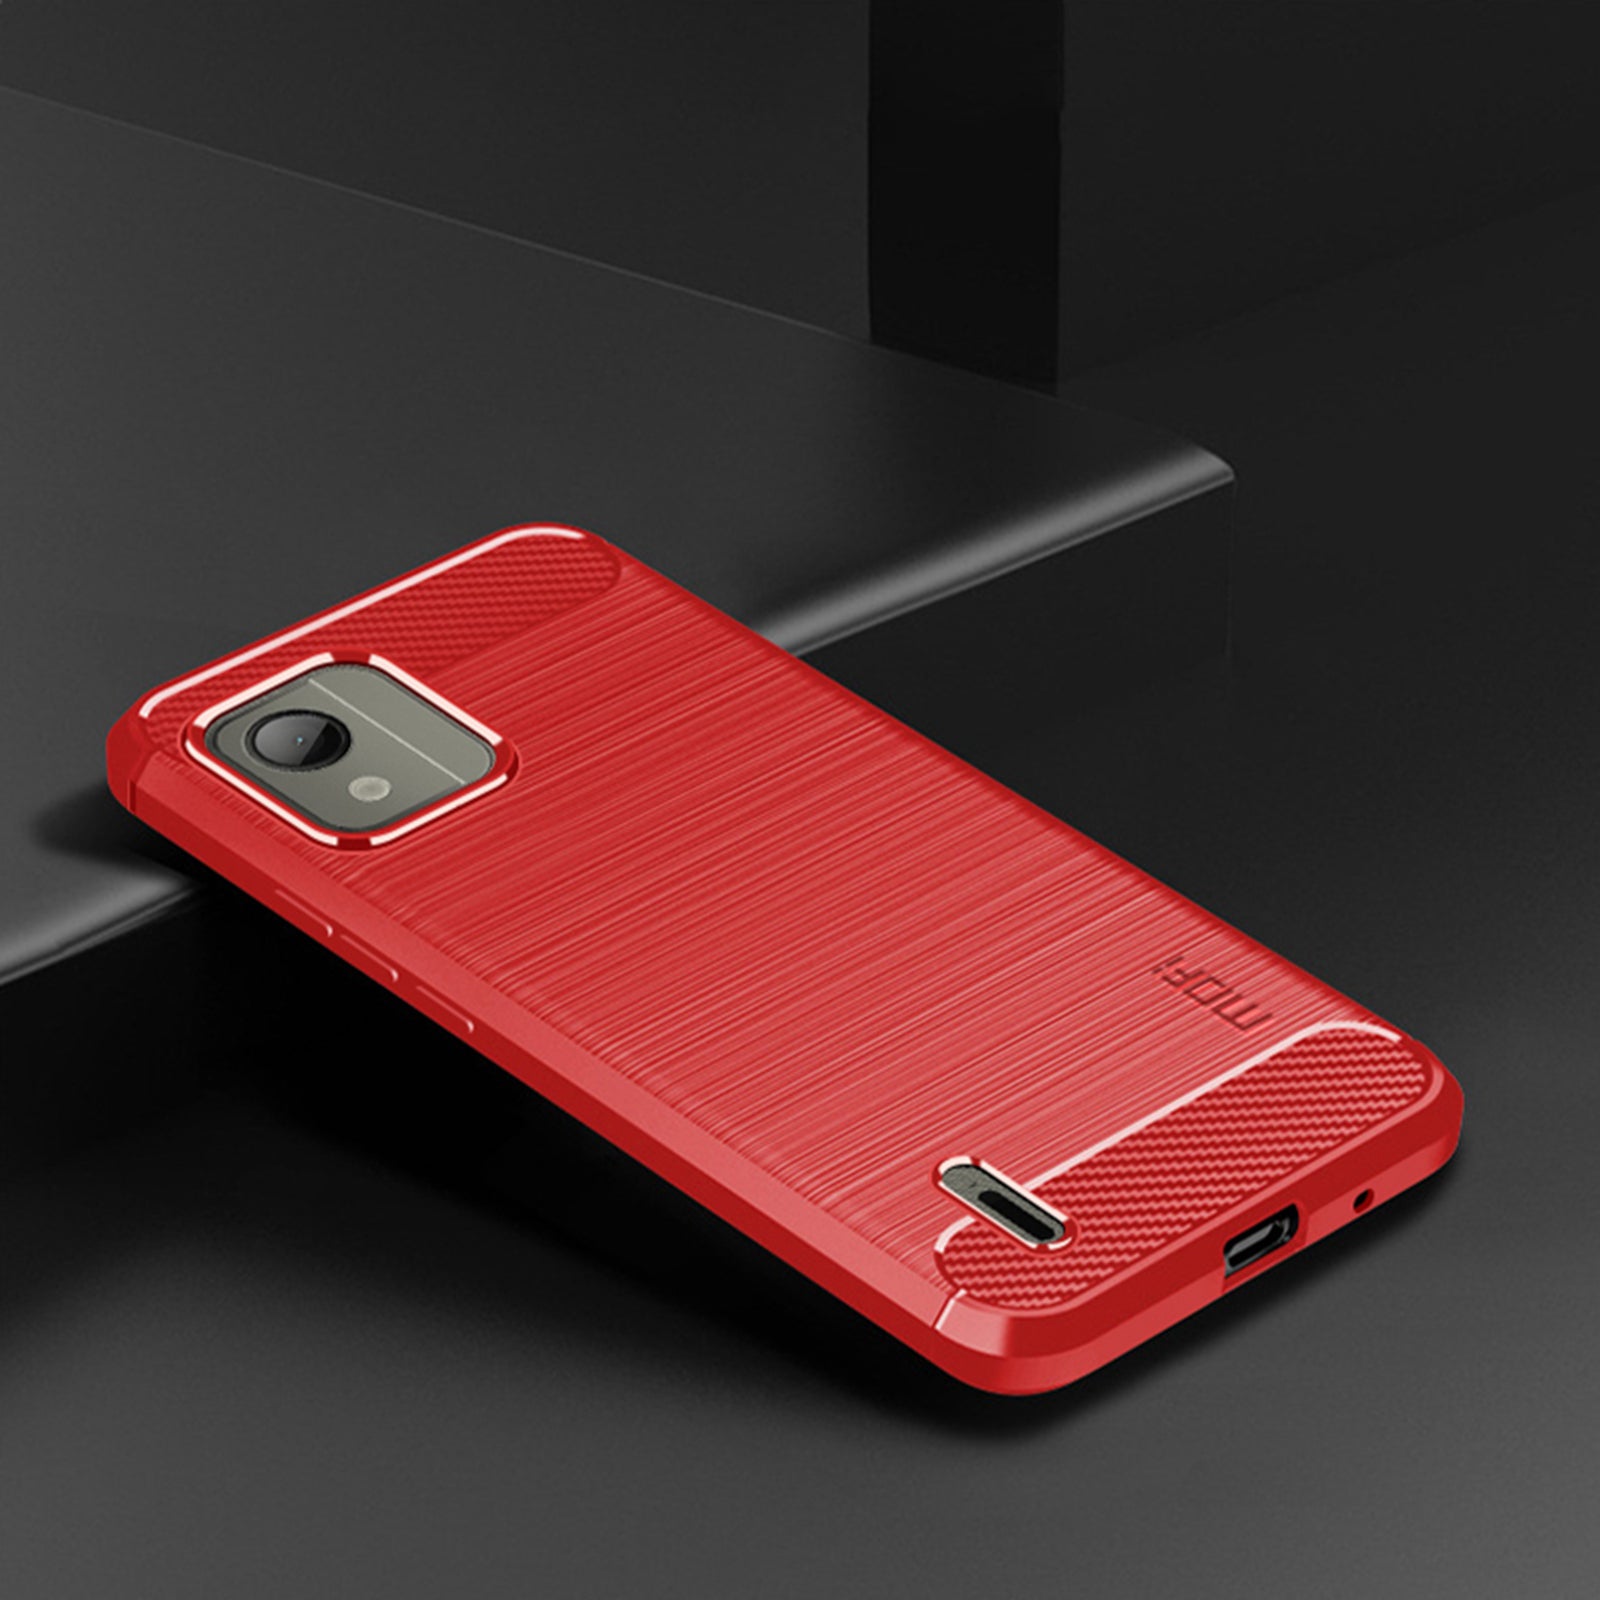 Uniqkart TPU Series-1 TPU Phone Case for Nokia C110 Carbon Fiber Brushed Phone Cover - Red